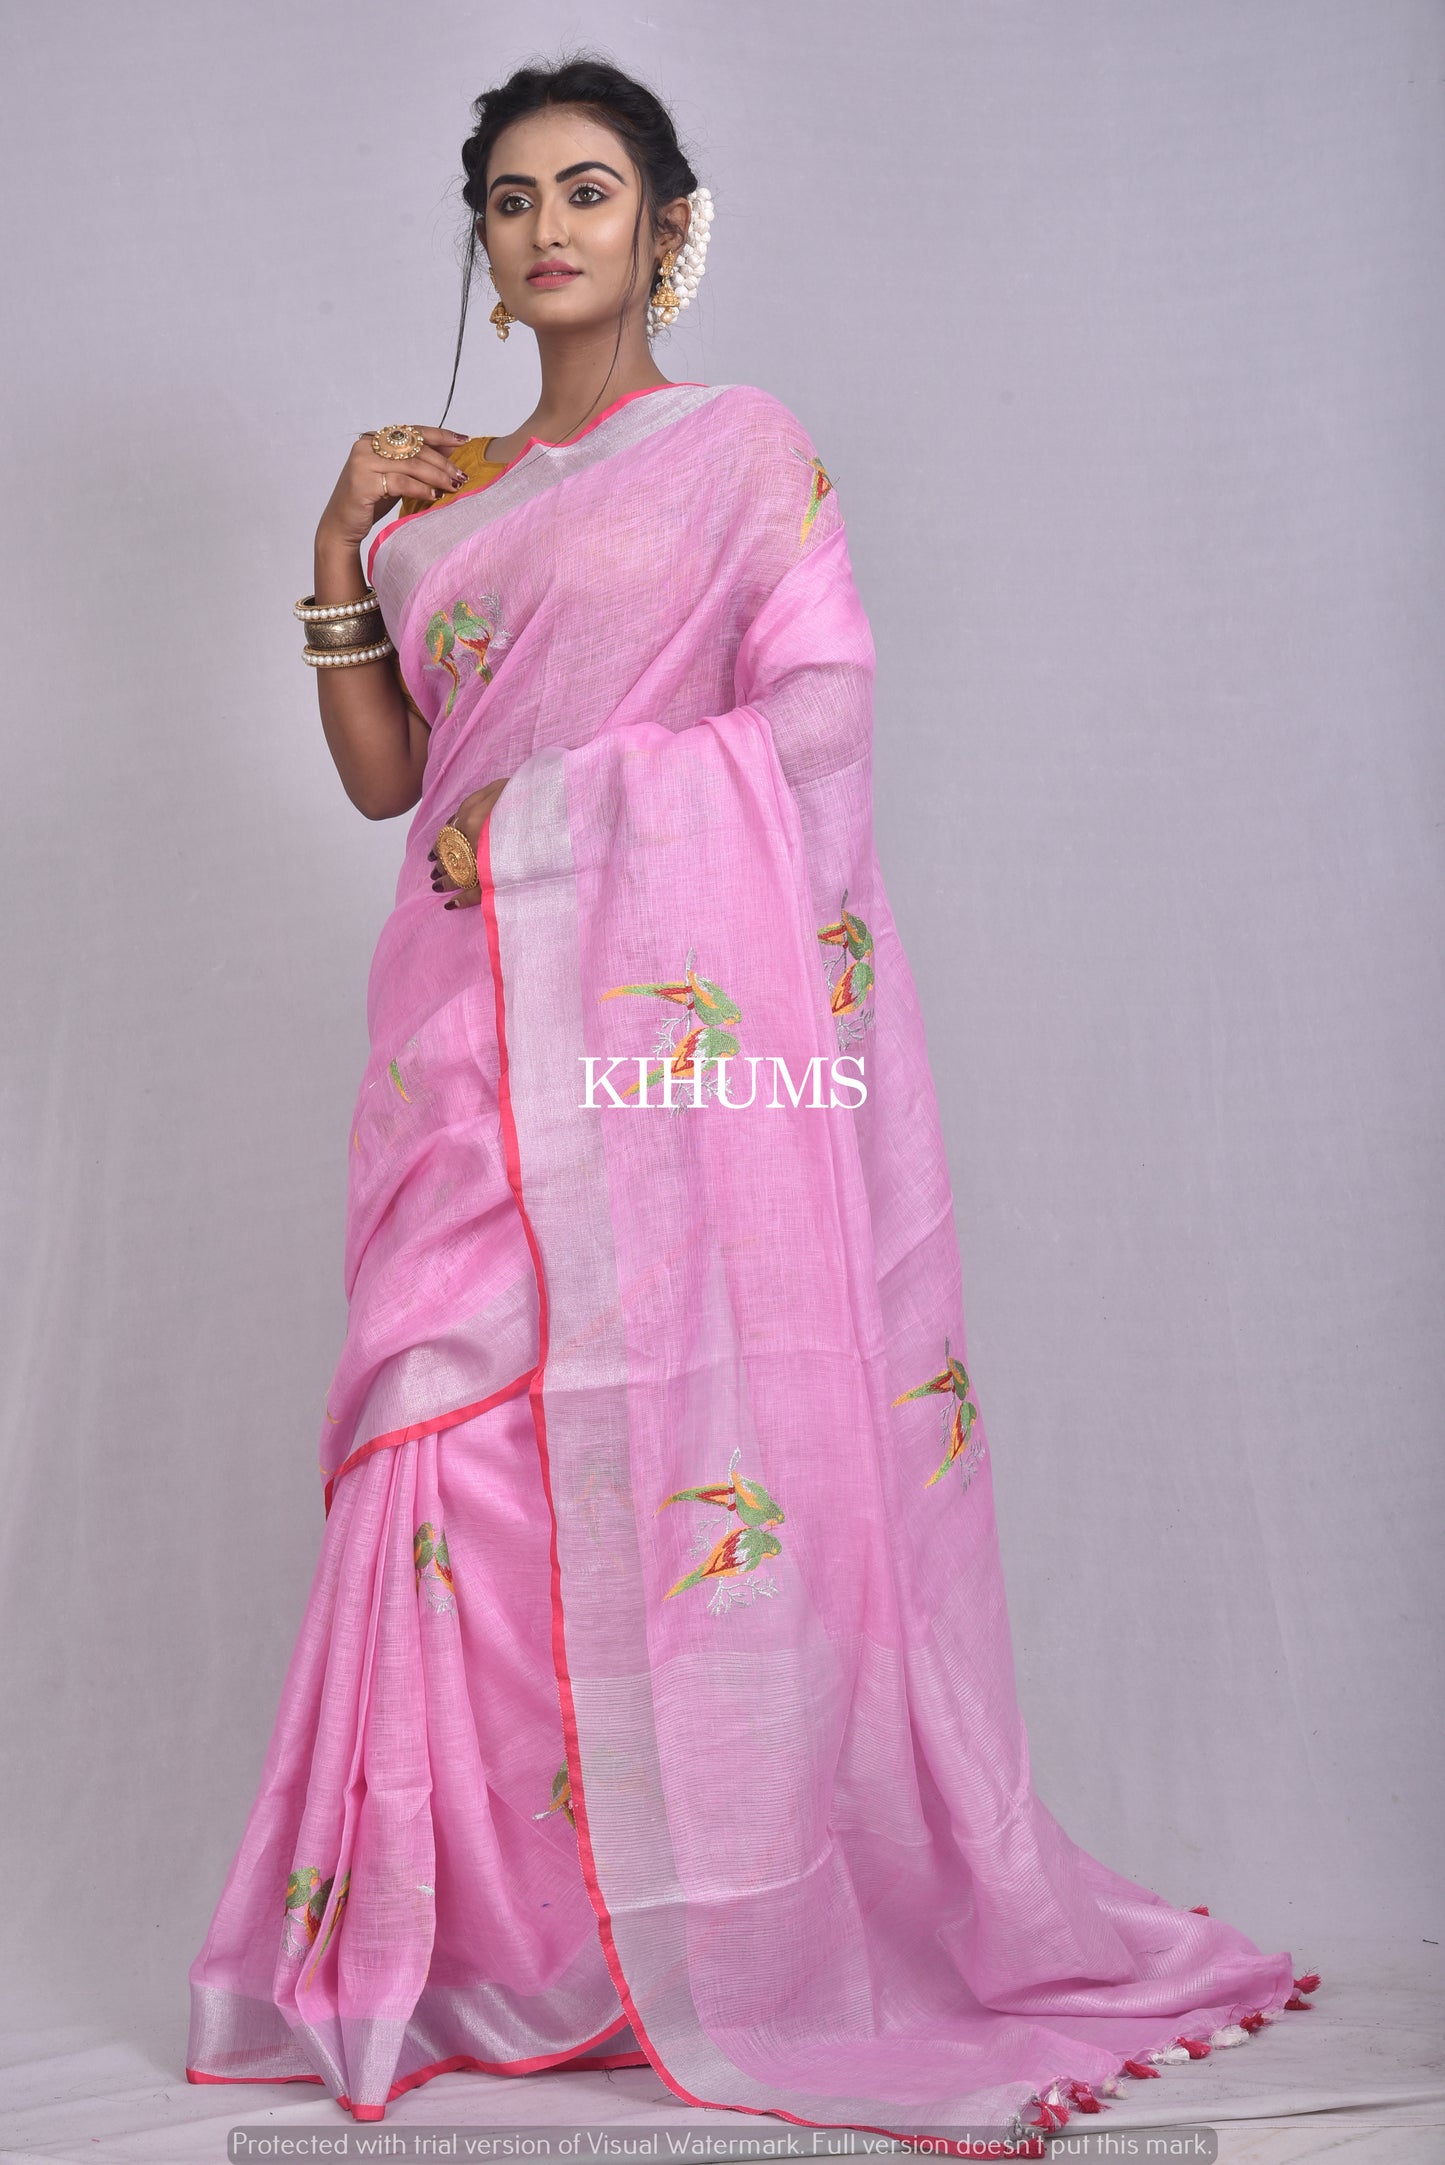 Pink Shade Handwoven Linen Saree with Embroidery Work | Silver Zari Border | KIHUMS Saree